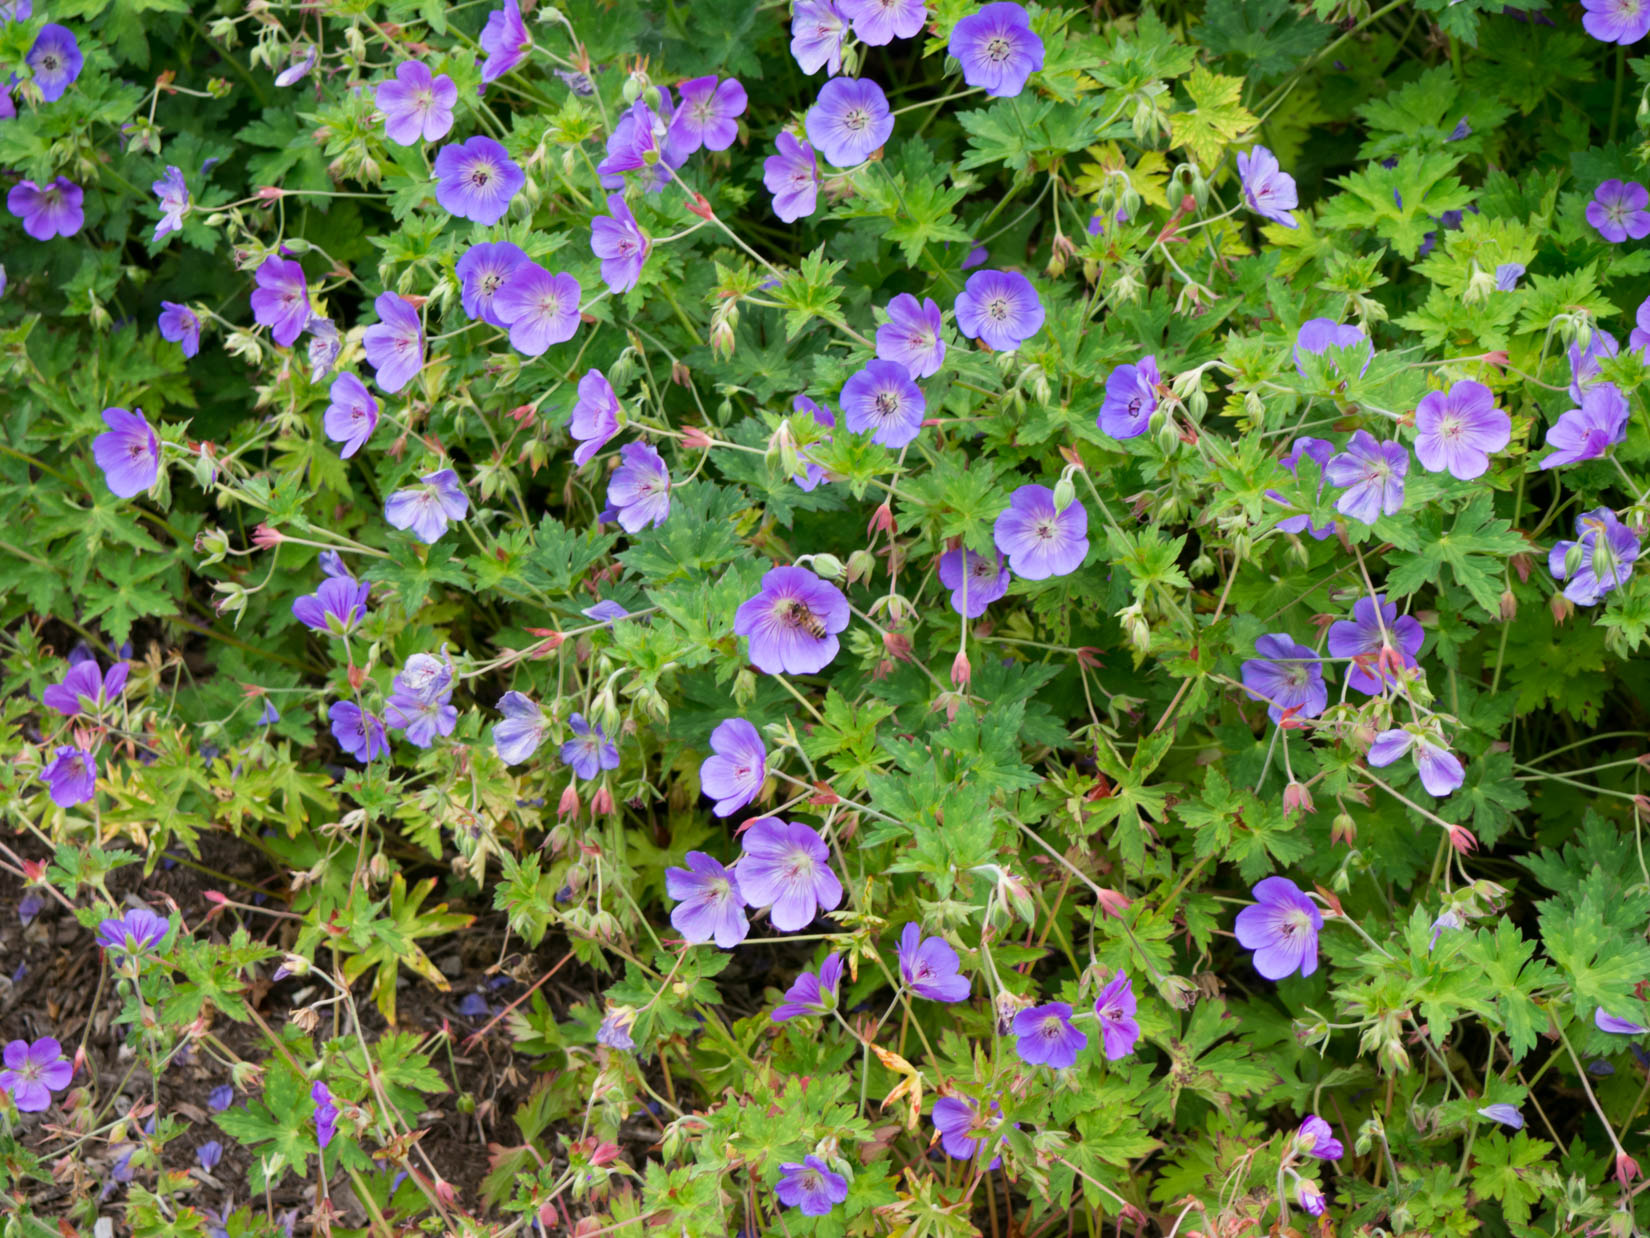 Purple Flowers with Bee